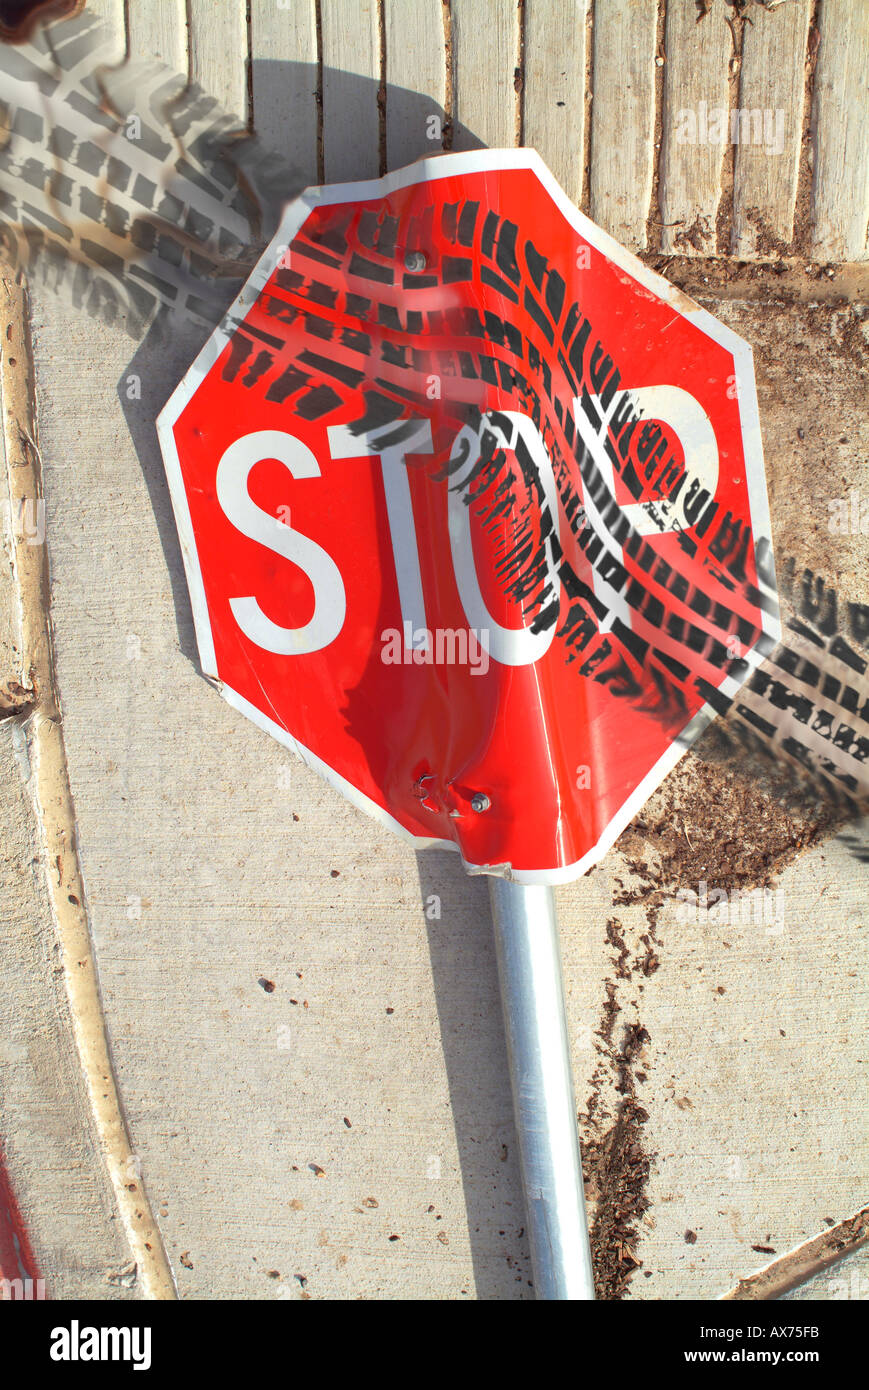 Pkw-Reifen tritt Stoppschild überfahren Stockfotografie - Alamy